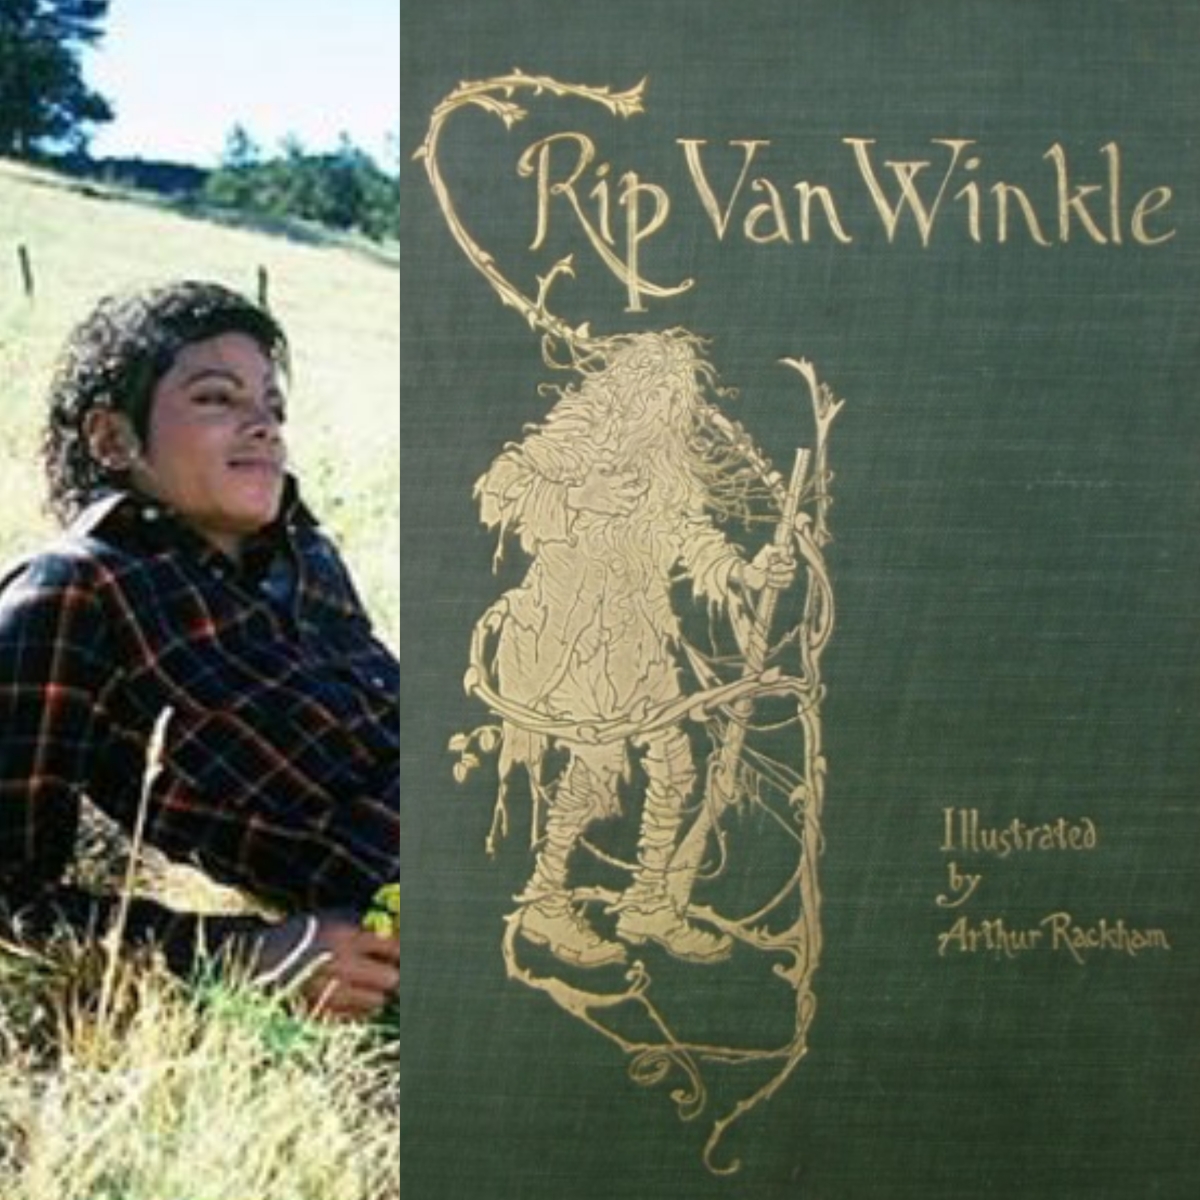 Michael Jackson and Rip Van Winkle – Washington Irving – 1819.